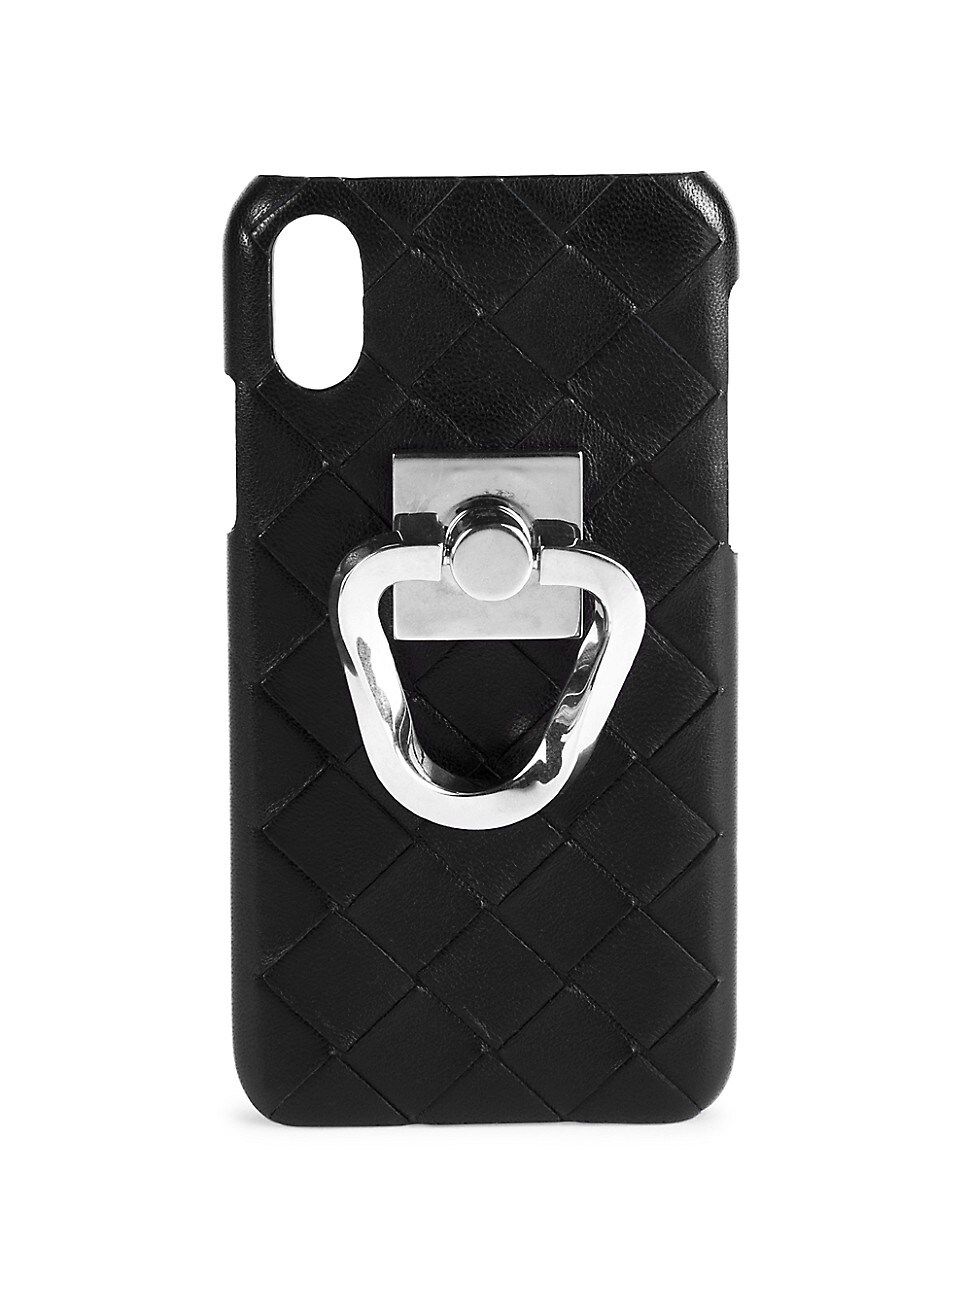 Bottega Veneta Women's Leather iPhone 11 Case - Black Silver | Saks Fifth Avenue